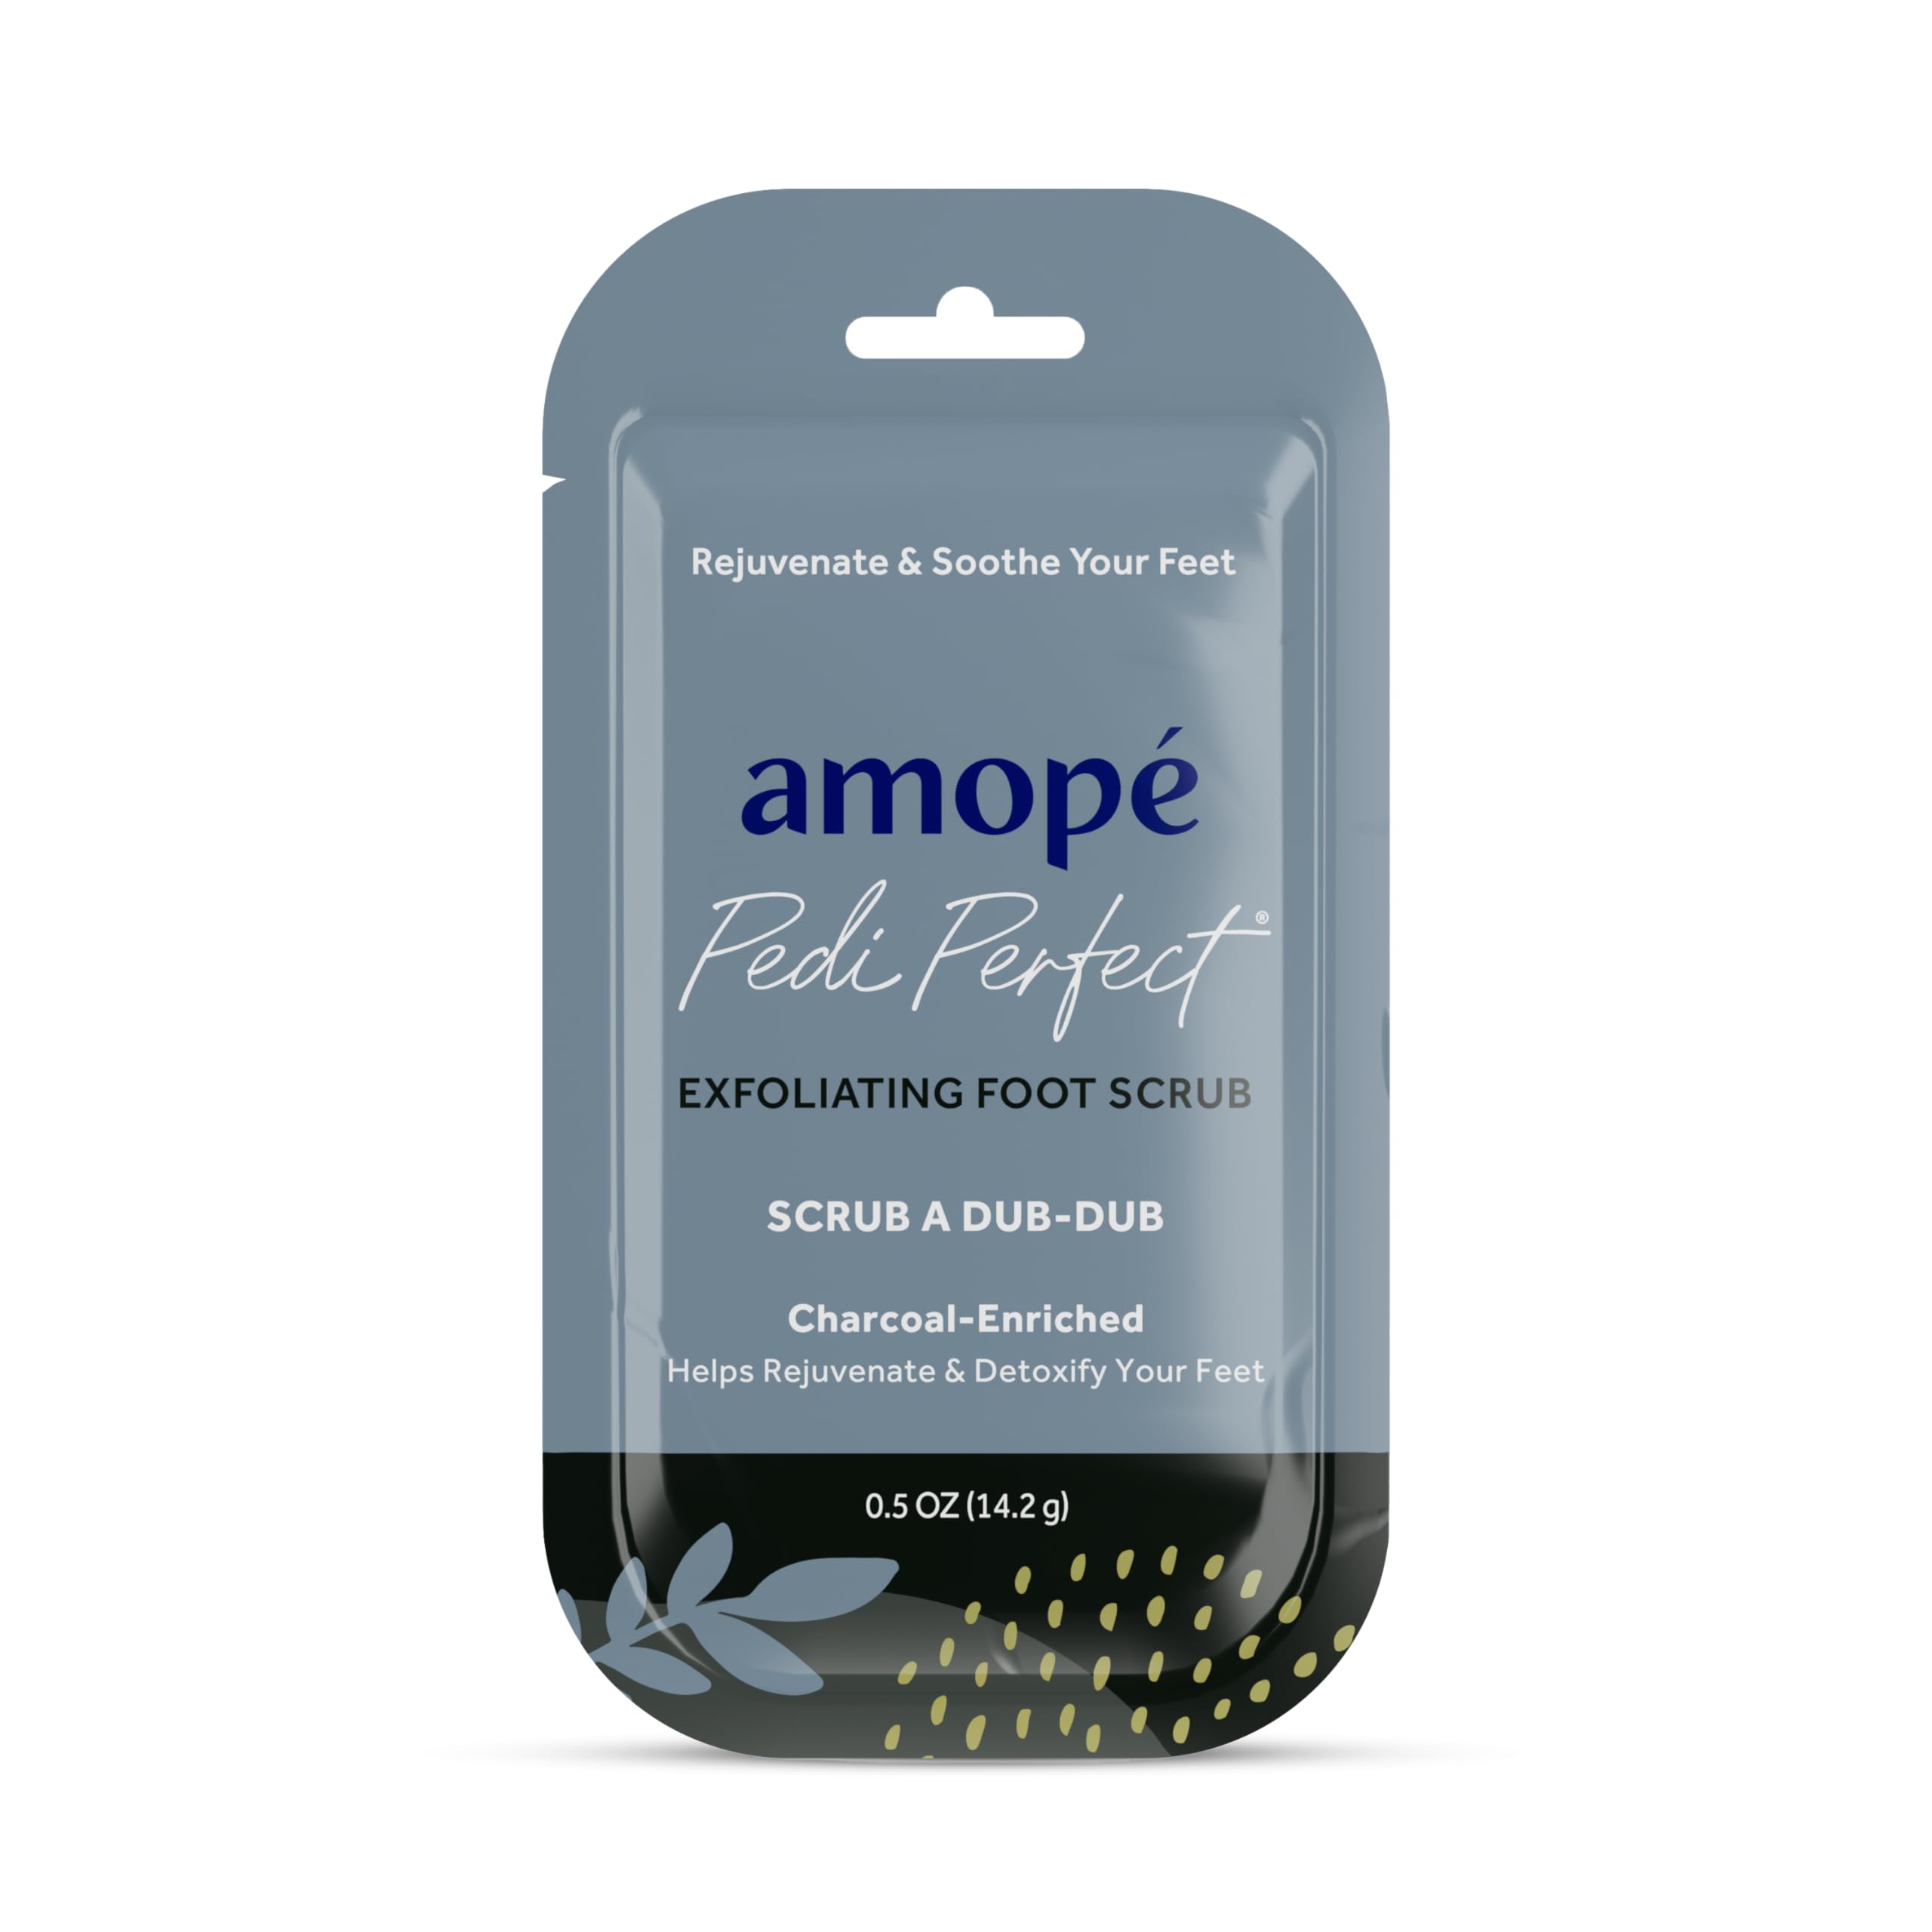 Amopé Pampering Kit - Contains Charcoal Foot Scrub, Tea Tree Foot Scrub, Epsom Salt Foot Scrub, Invigorating Foot Soak, Tired Leg & Foot Rejuvenator, Foot & Leg Scrubber and Luxury Storage Bag